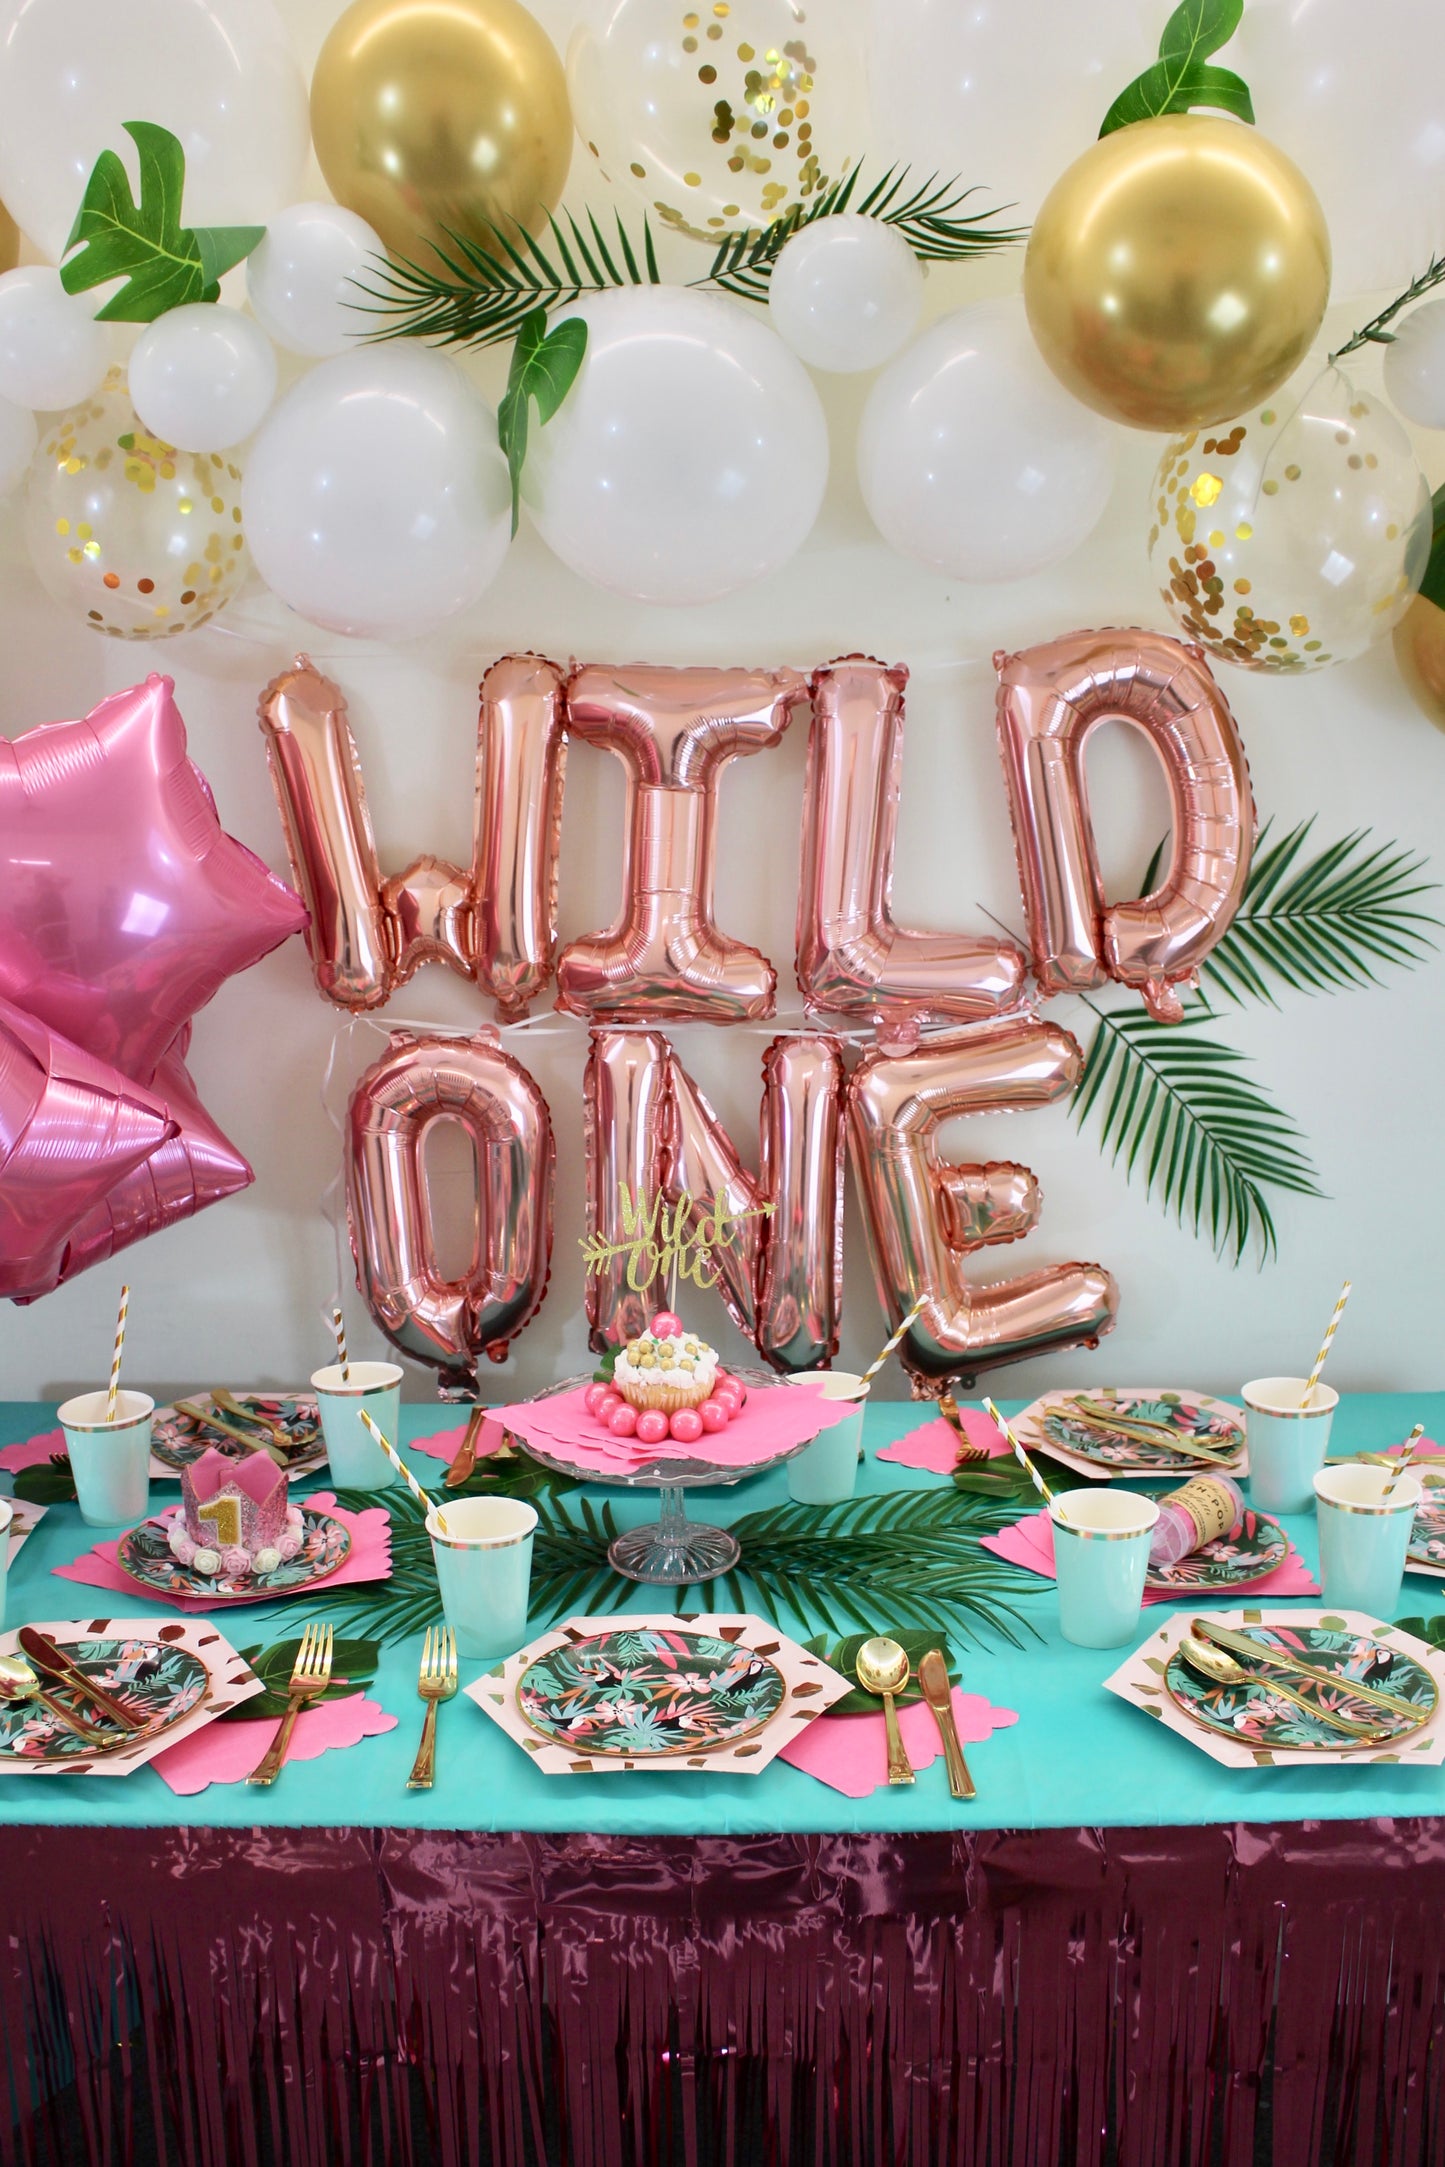 Wild One Birthday Party Box